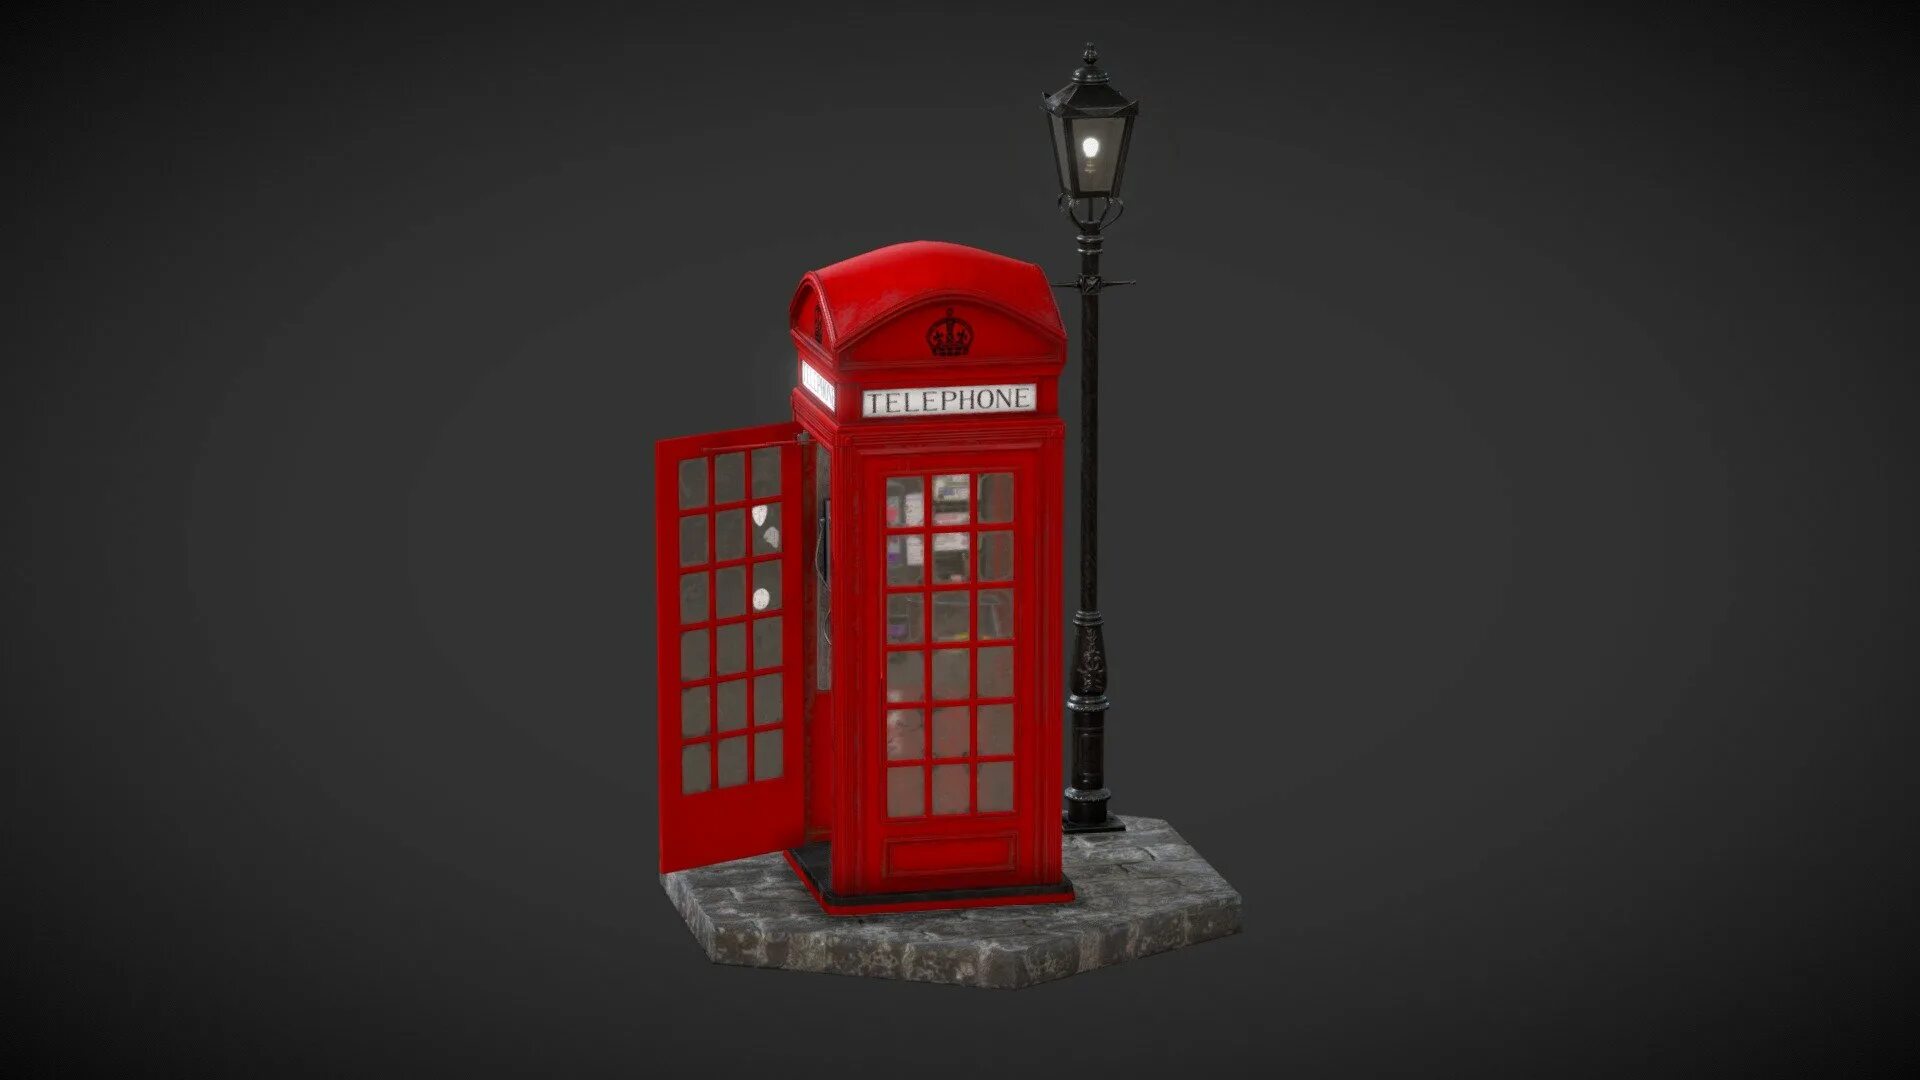 Red Phone Booth London. Модель: Red telephone Box. Лондон телефонный будка 3d model.